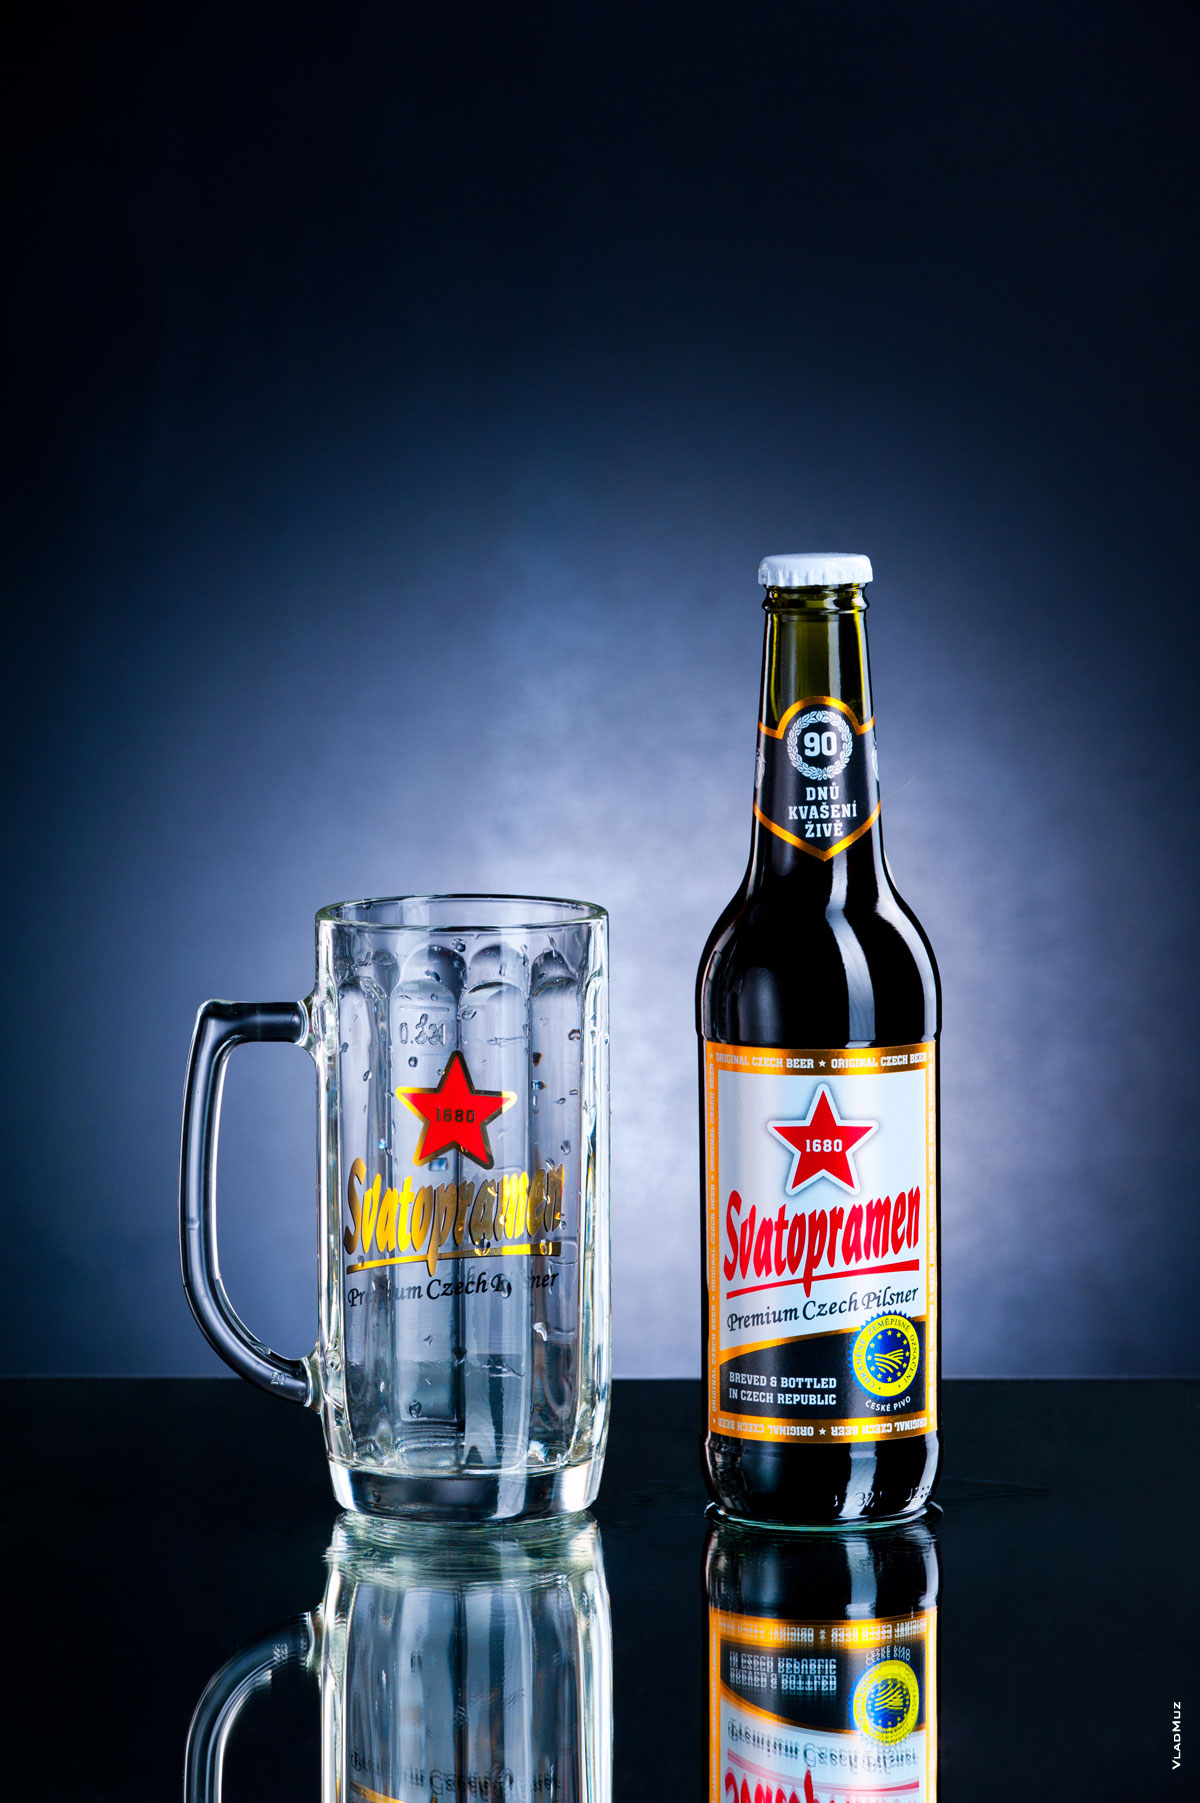 Фото пустой пивной кружки и бутылки темного пива «Святопрамен»